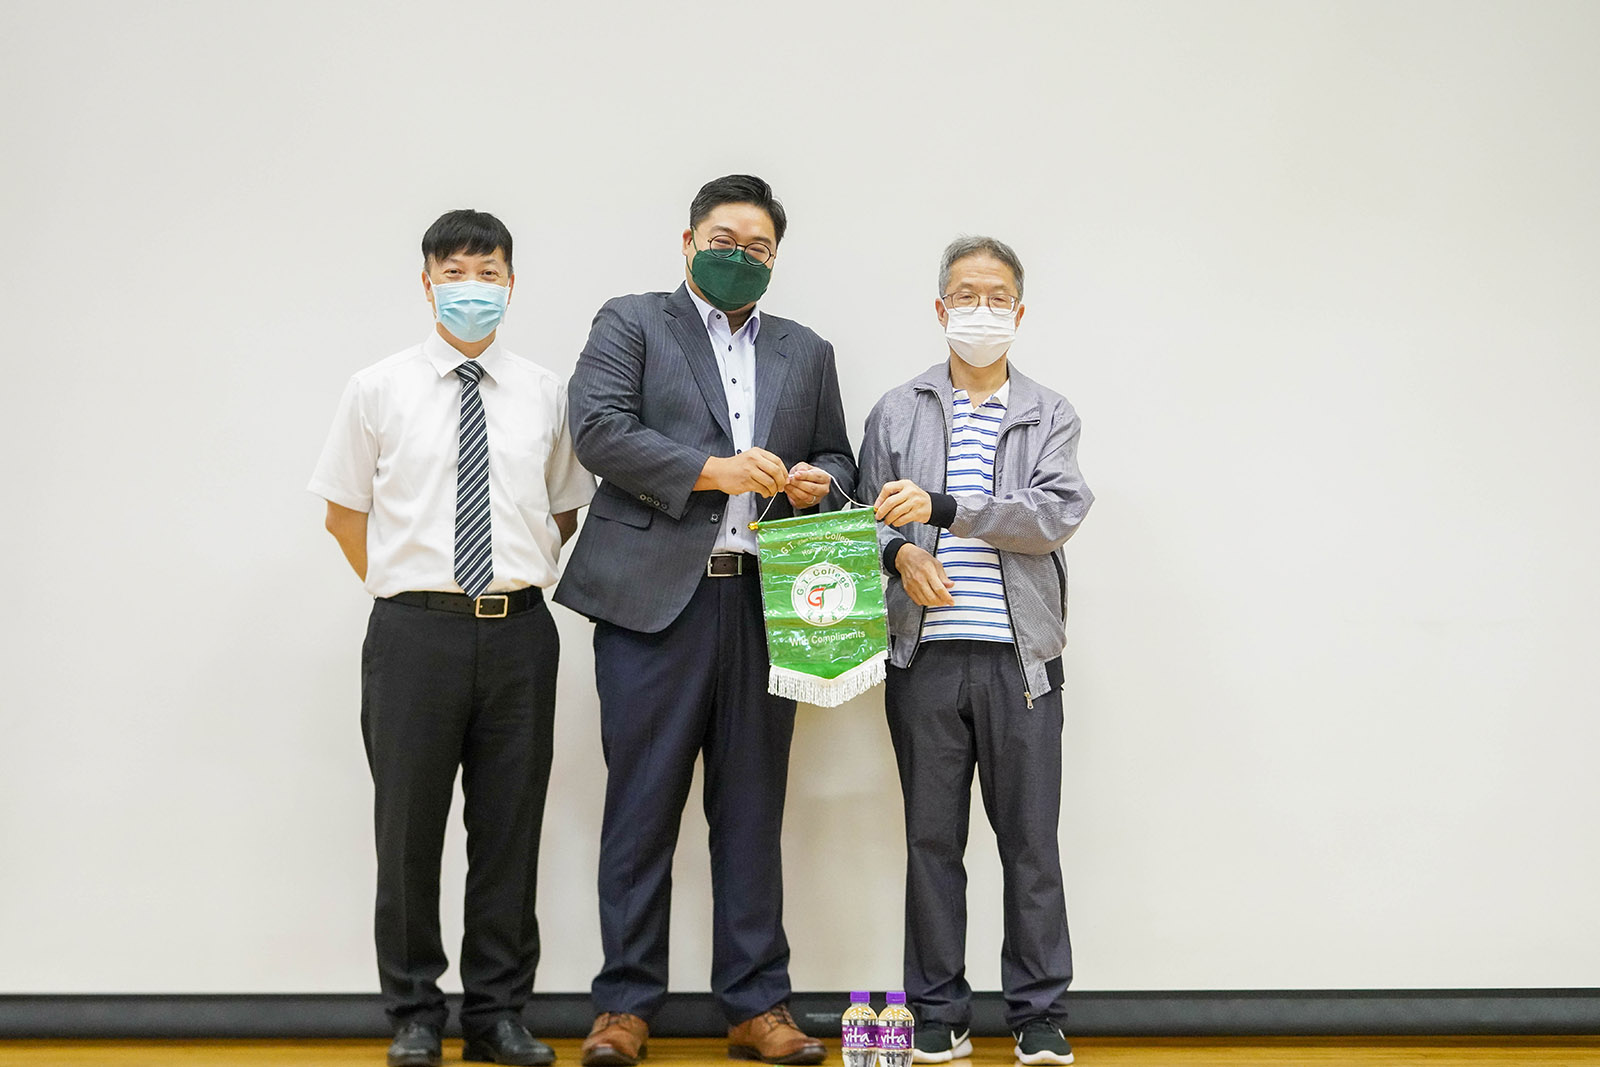 Assembly – A HONG KONG Entrepreneurial Story during the COVID pandemic